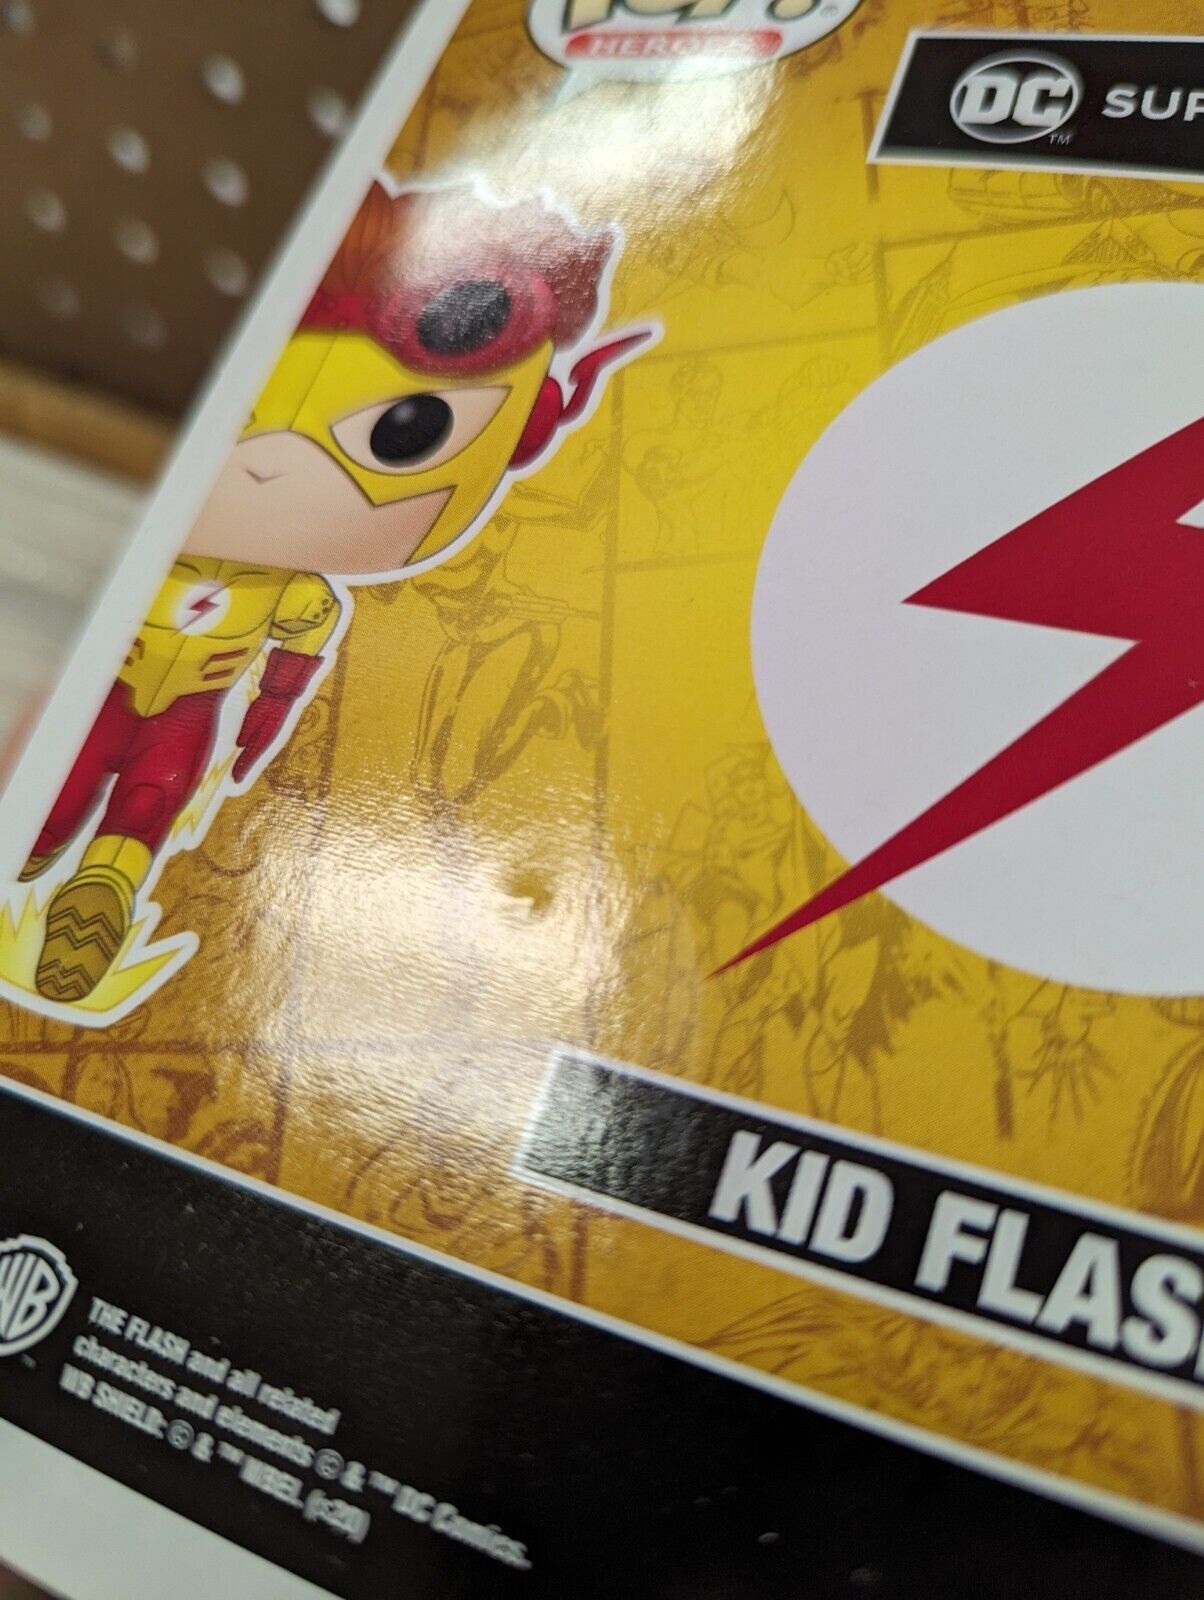 Funko Pop Kid Flash 320 Hot Topic Glow Chase DC Comics